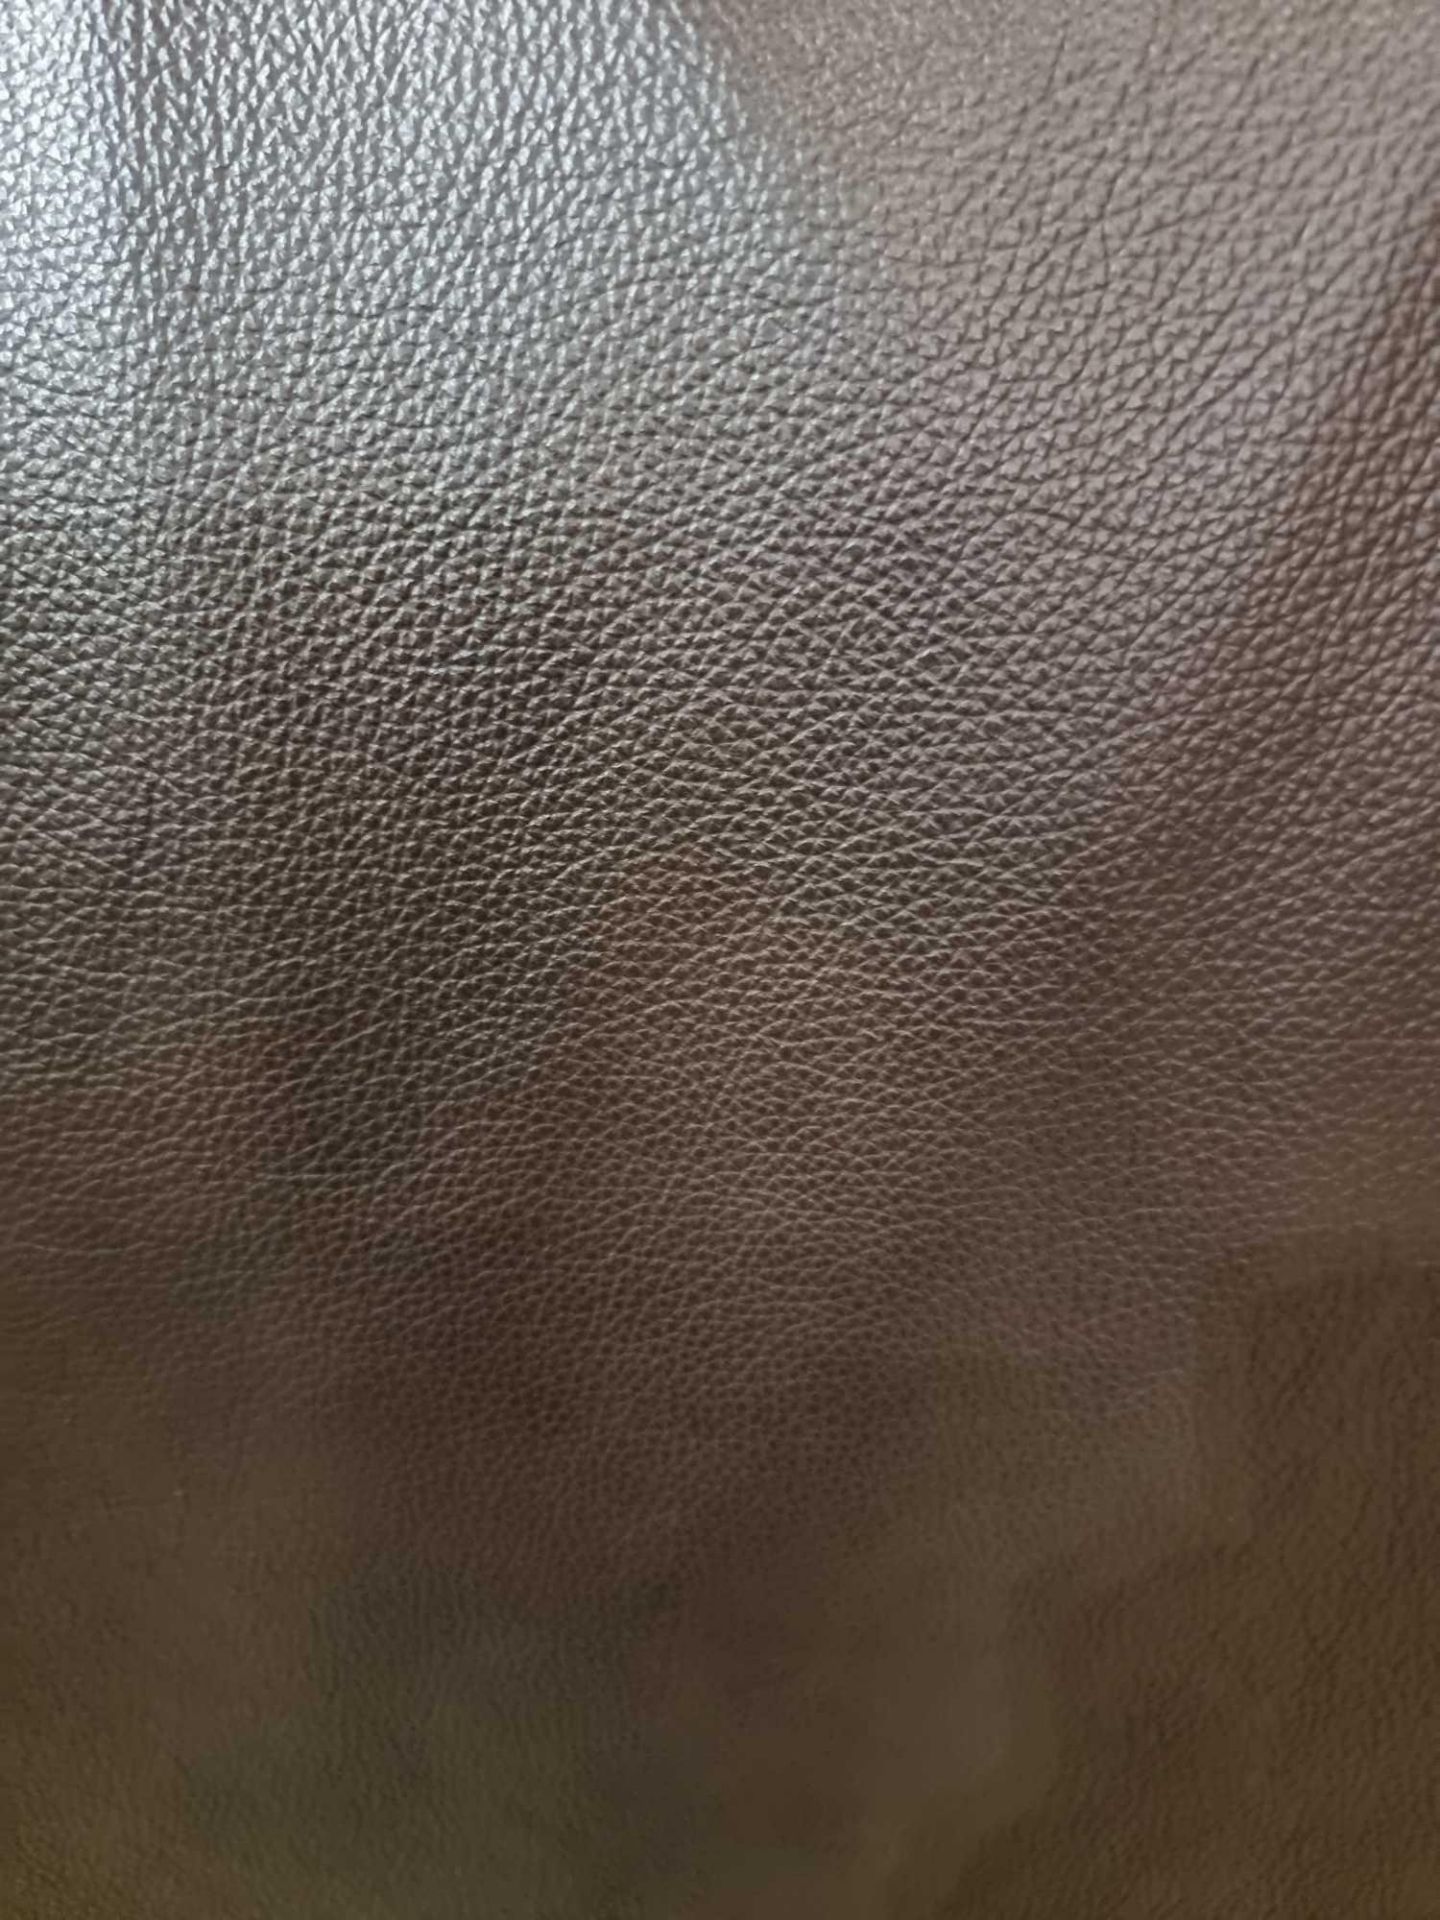 Mastrotto Hudson Chocolate Leather Hide approximately 4.37mÂ² 2.3 x 1.9cm ( Hide No,129) - Bild 2 aus 2